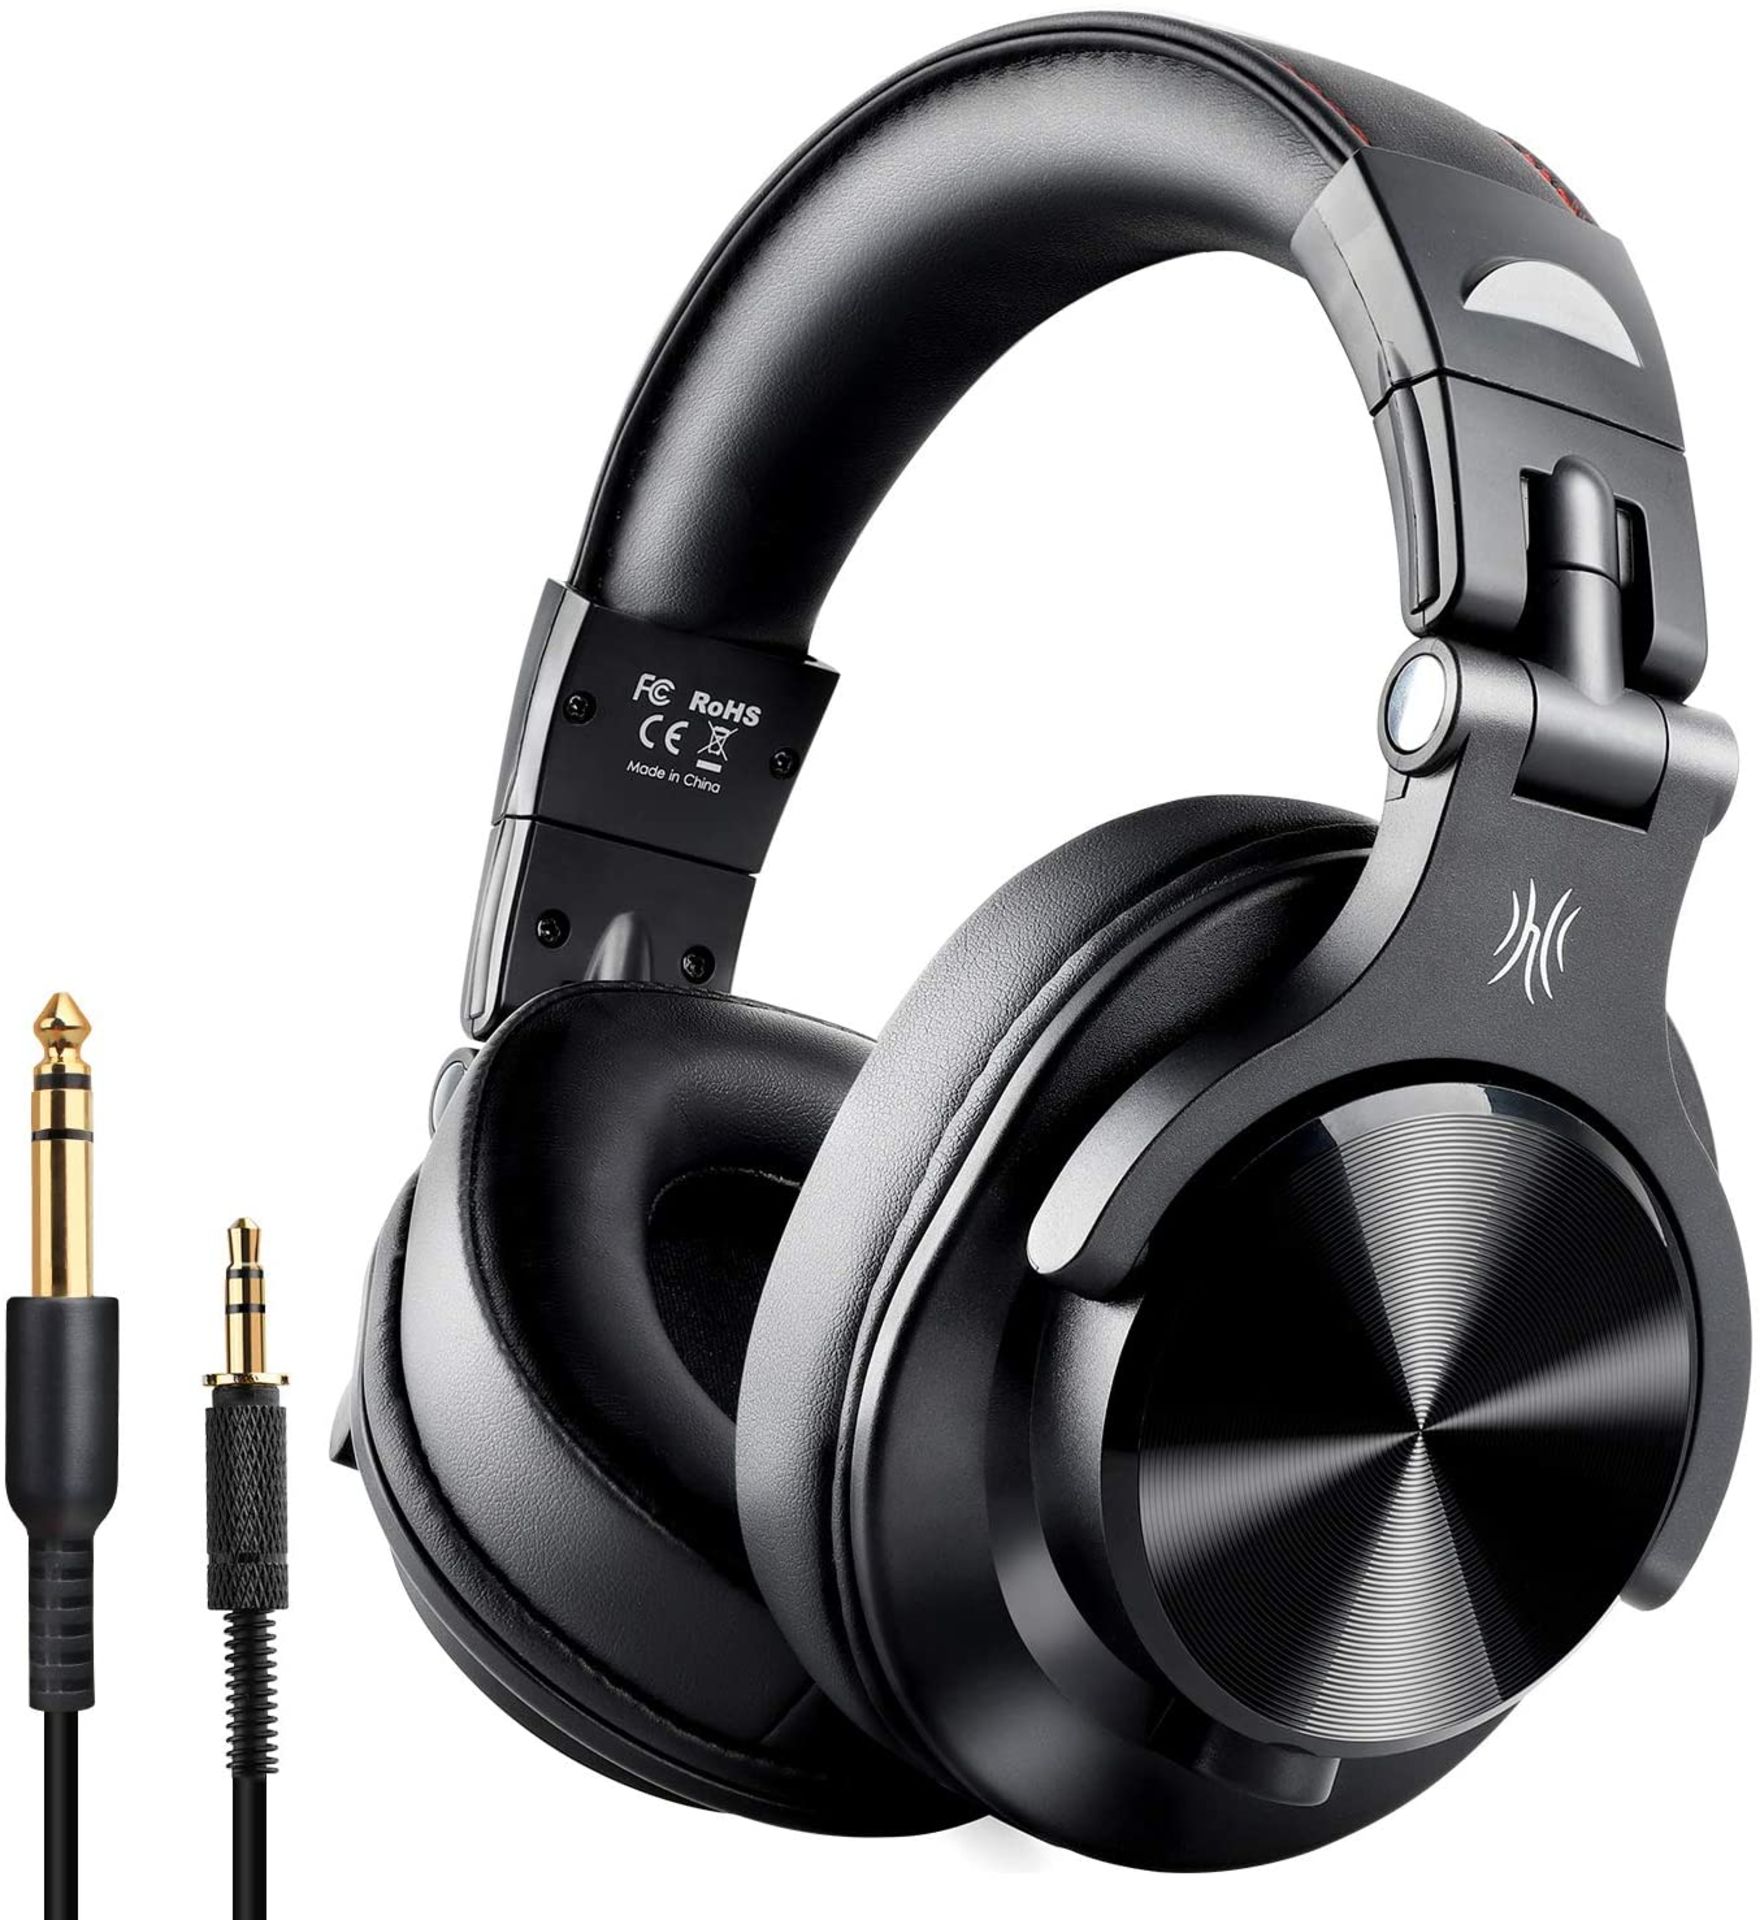 Boxed Brand New Pair One Audio Fusion A70 Black Wireless DJ Headphones RRP £45